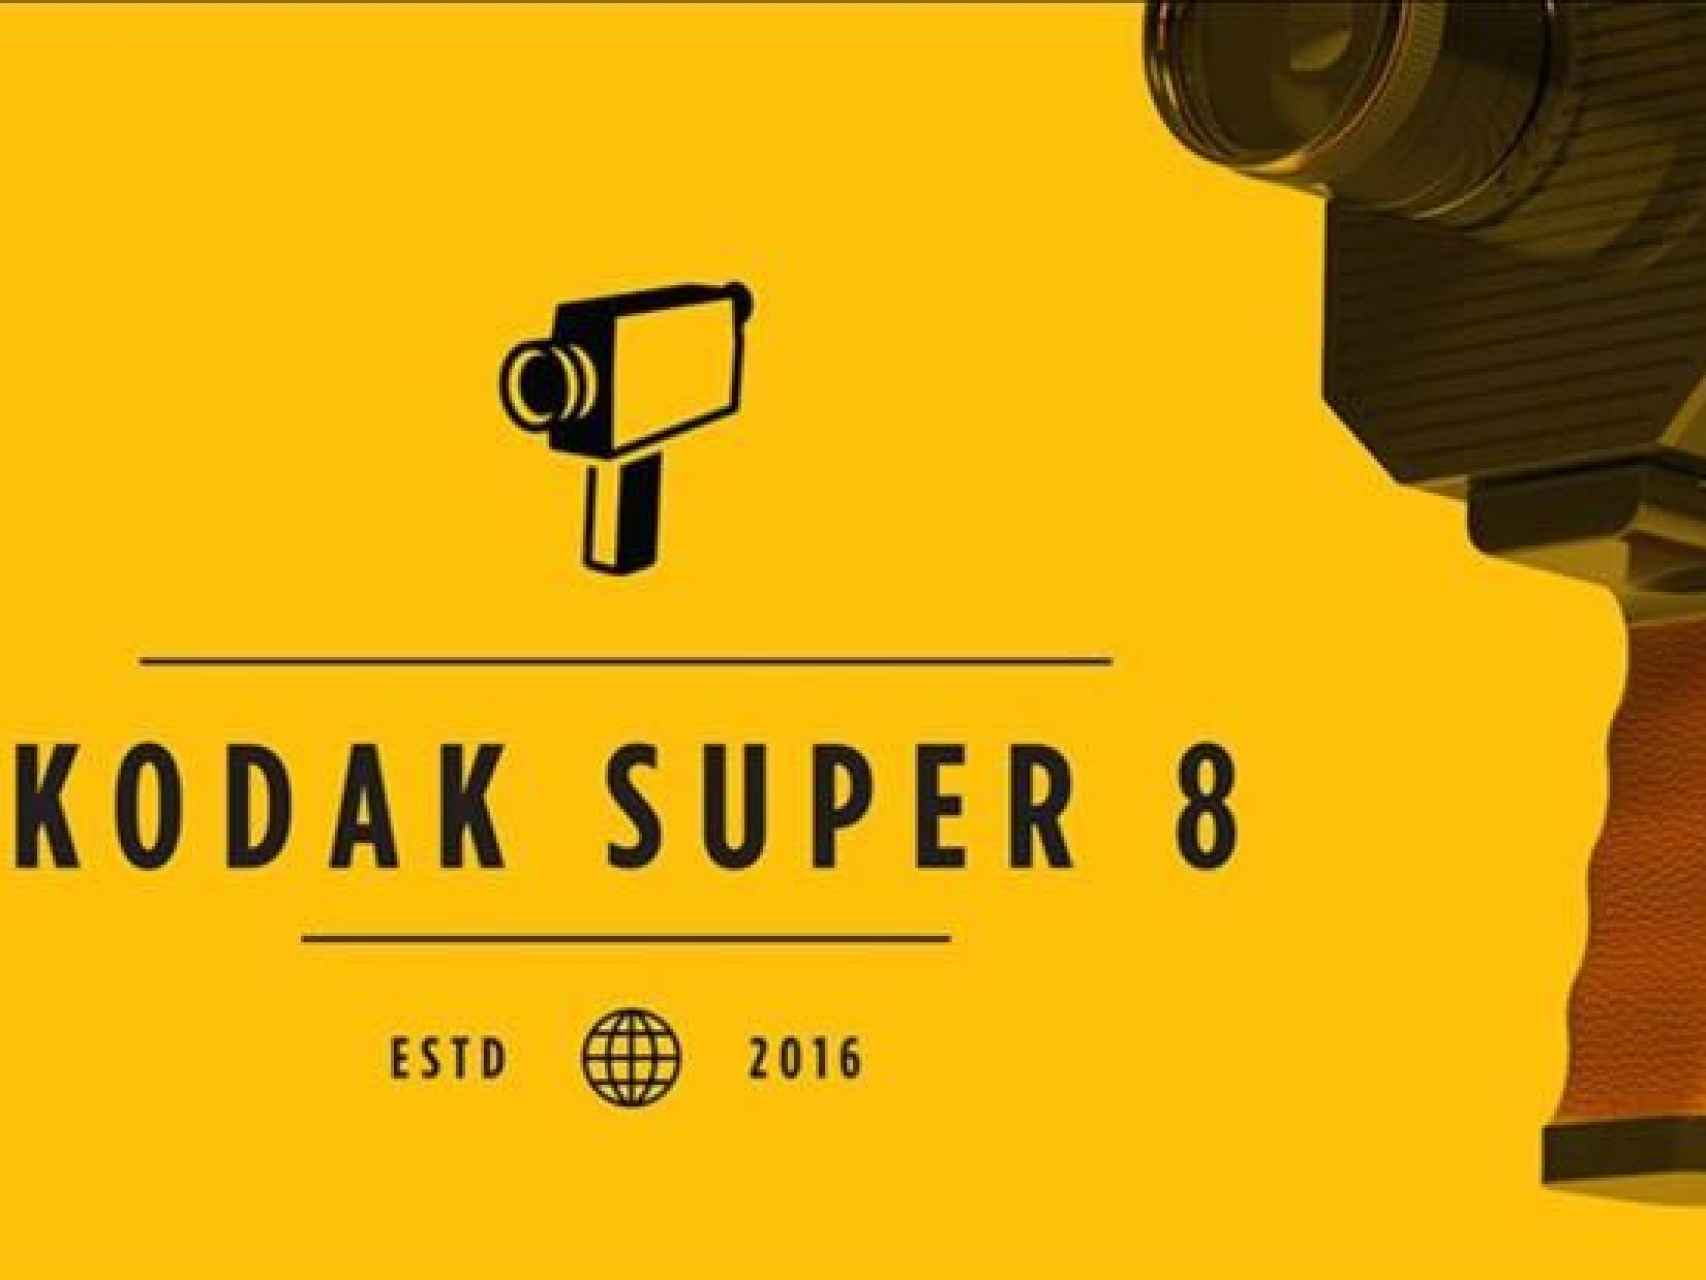 La nueva camara de Super8 de Kodak